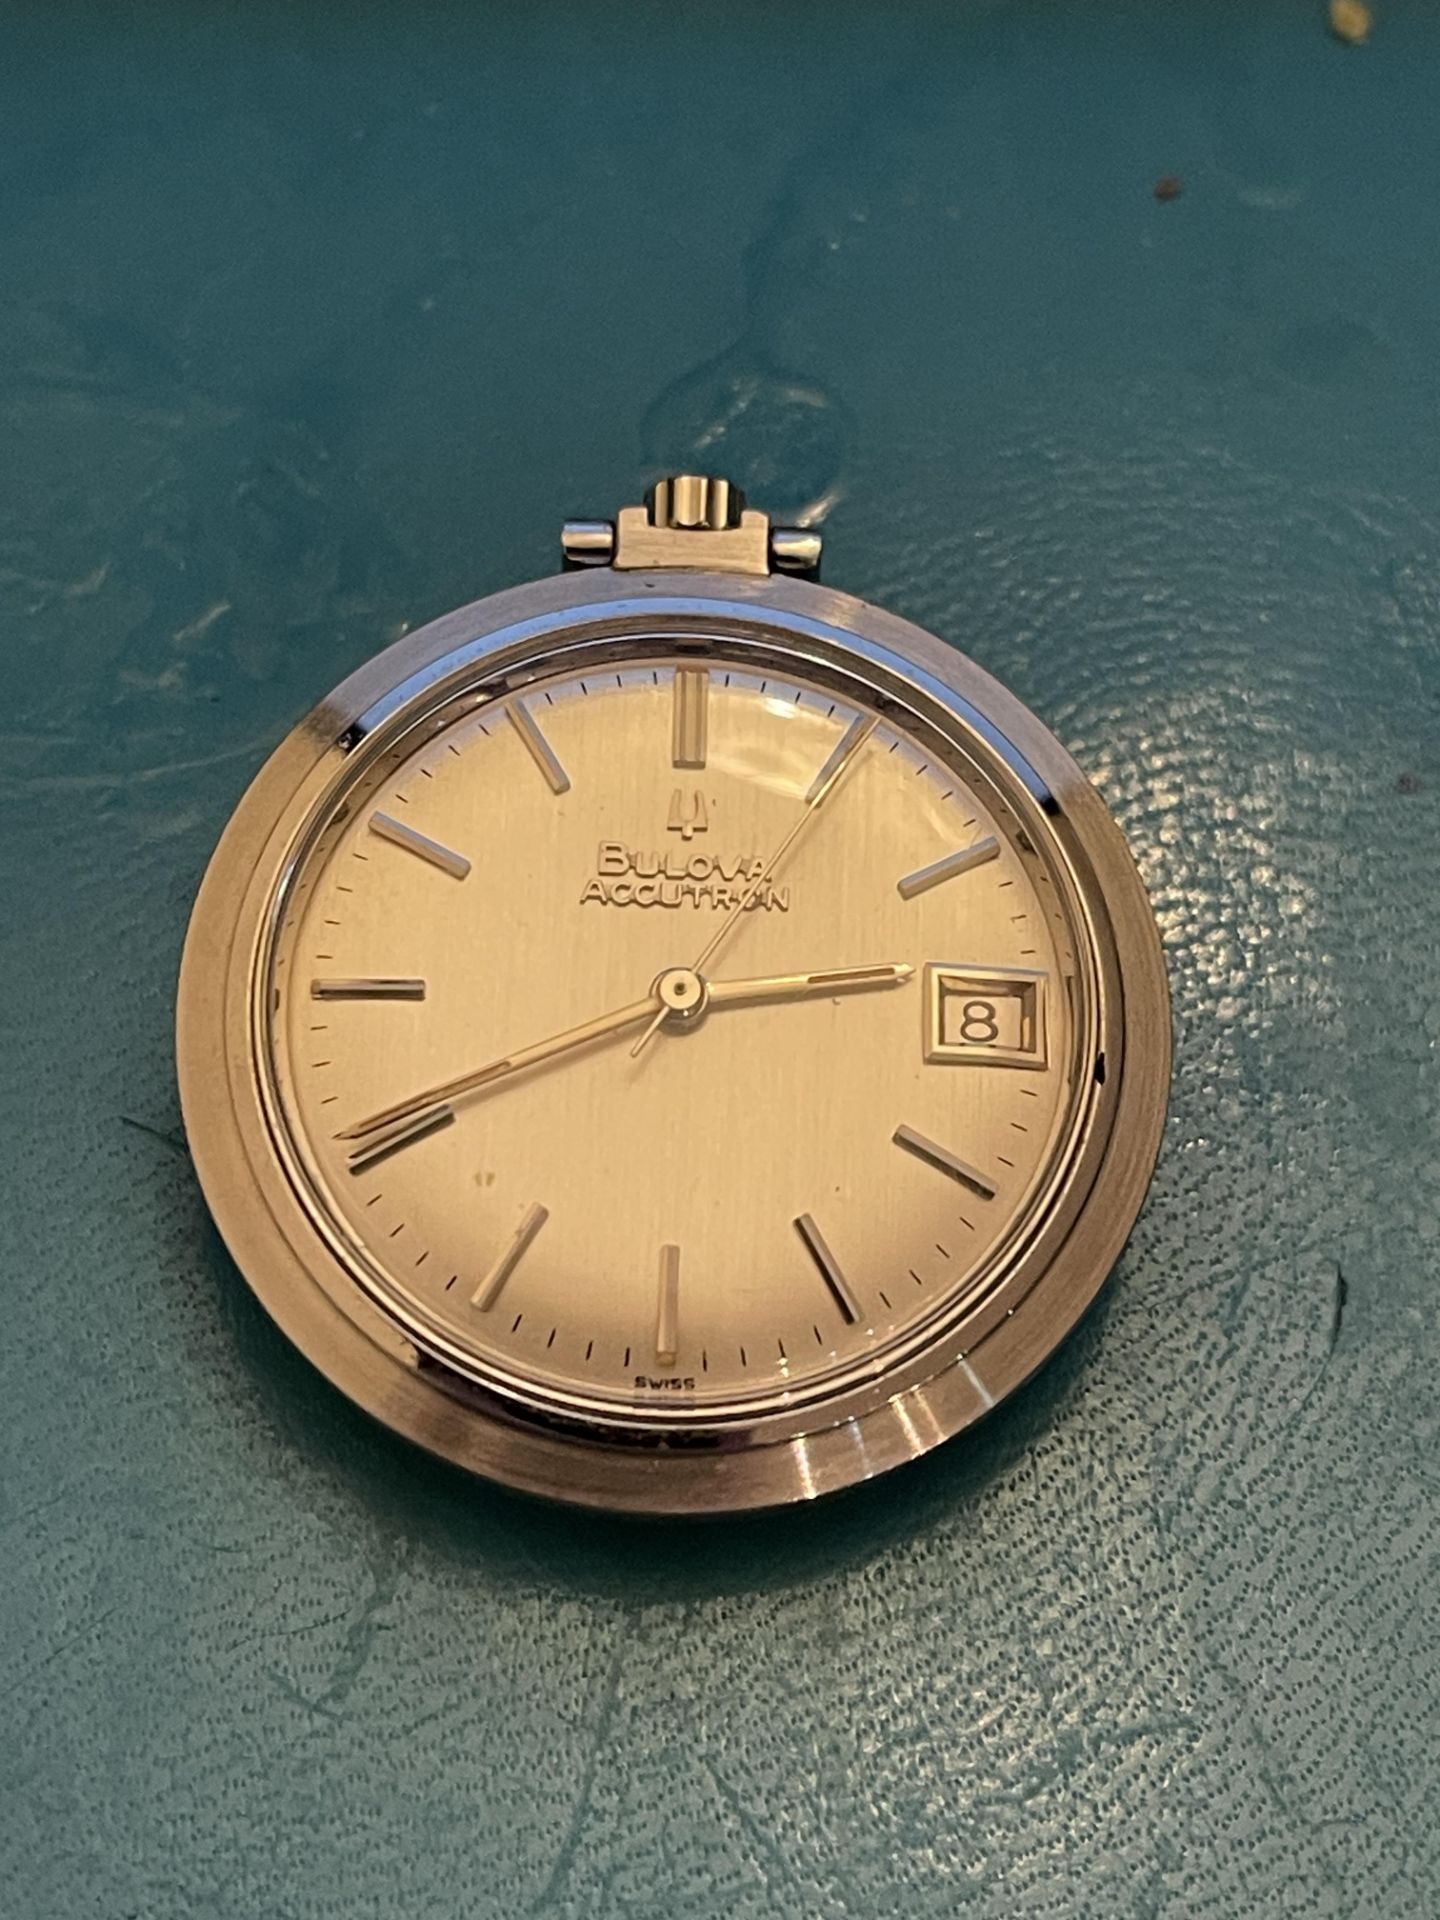 Bulova rare Accrutron men's pocket watch stainless steel - Image 7 of 8